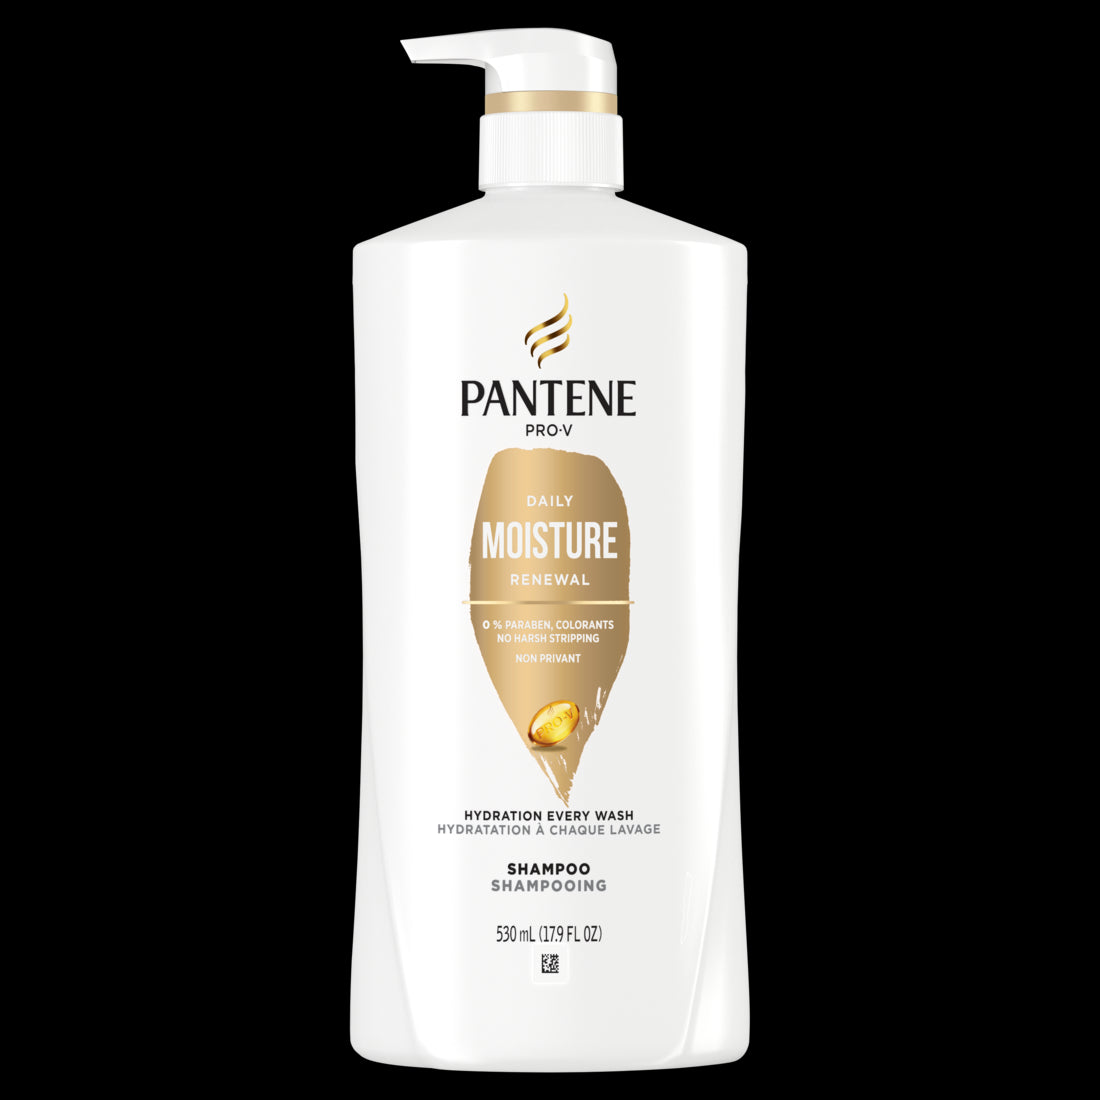 PANTENE PRO-V Daily Moisture Renewal Shampoo -17.9 oz/4pk